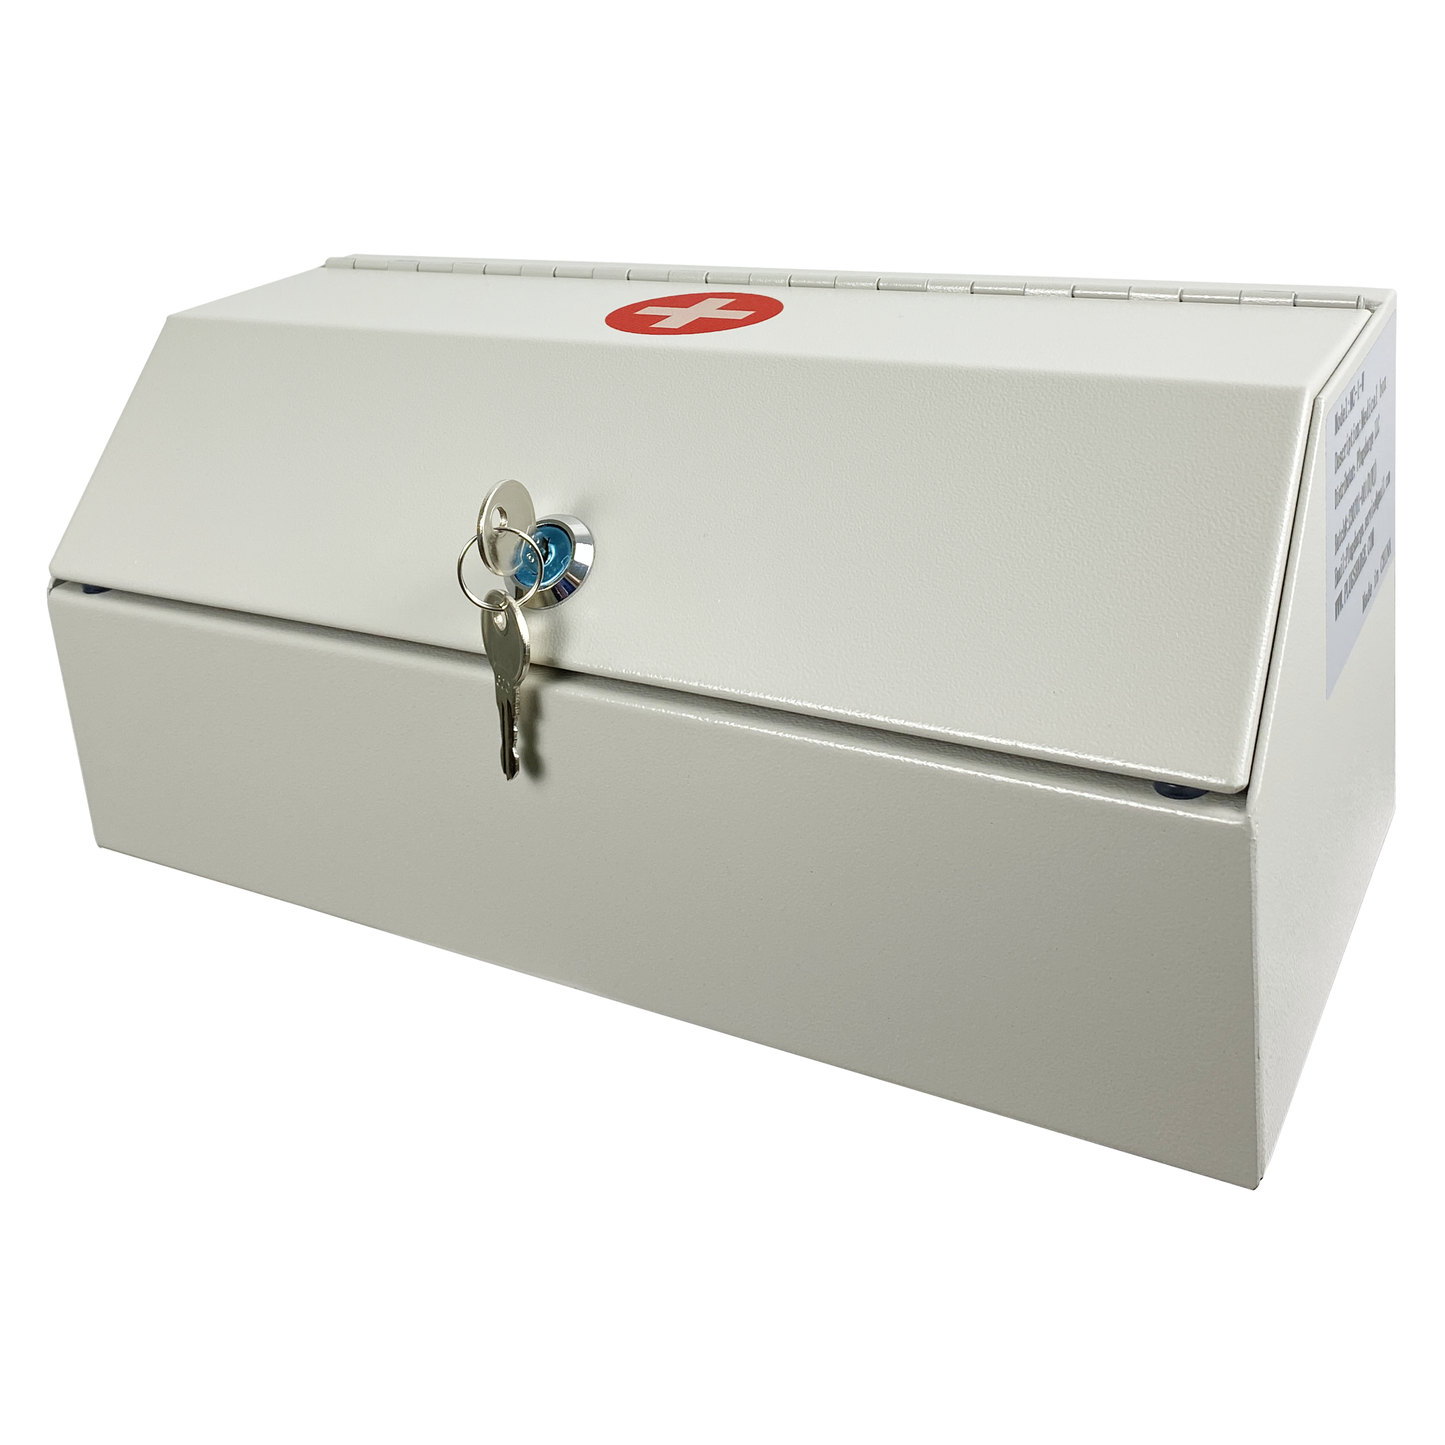 MC-1-W - Medicine Lock Box for Safe Medication Storage,Lockable Medici –  Plugsharge